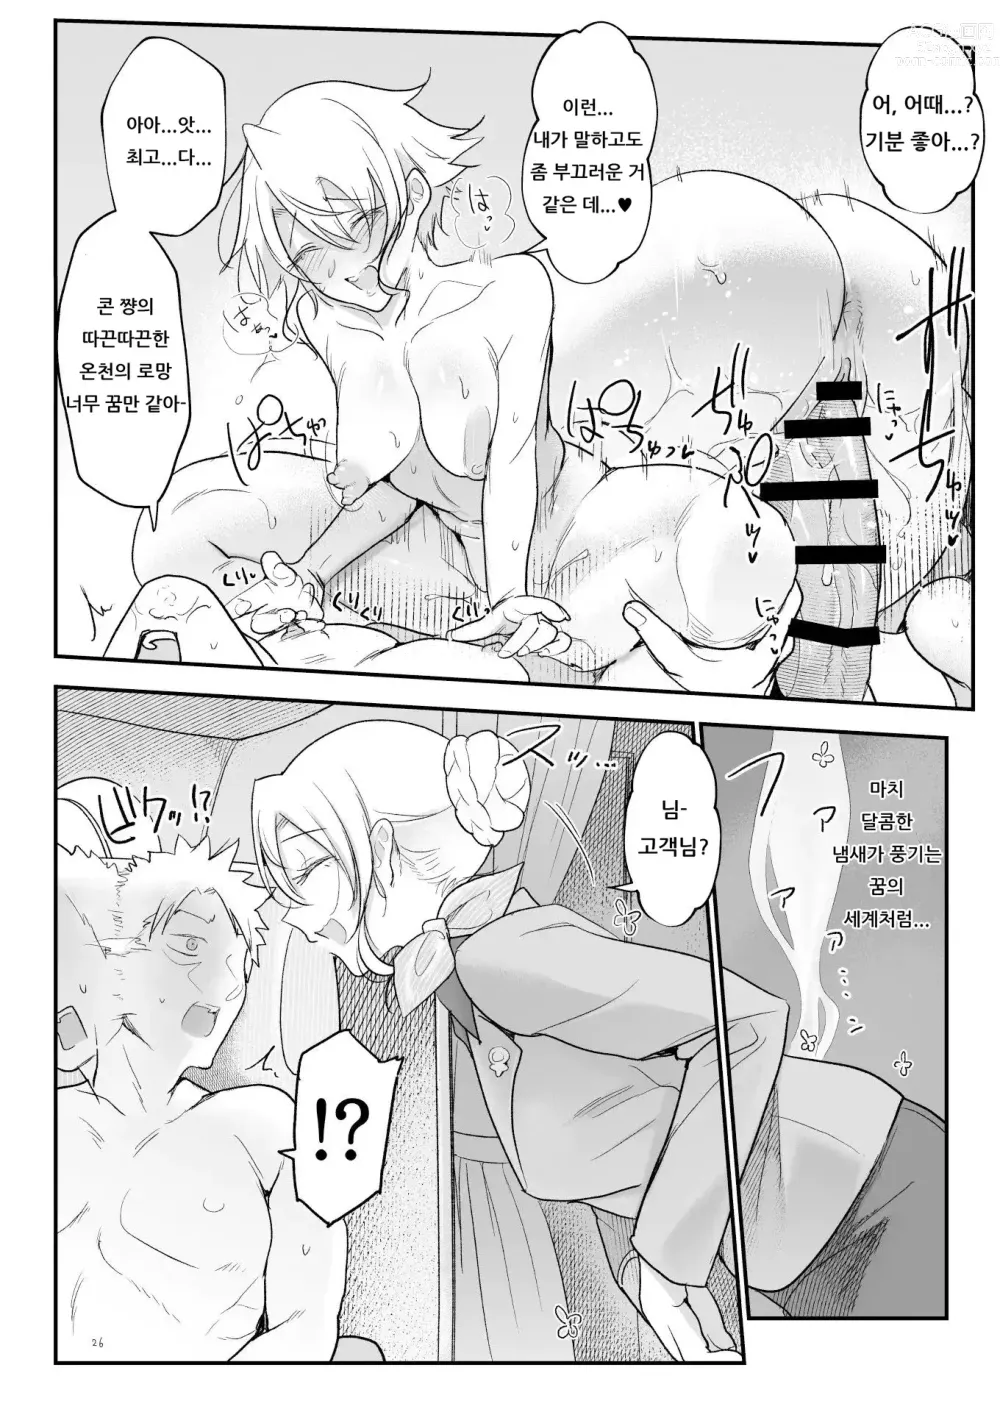 Page 25 of doujinshi 암컷 친구 온천 구멍의 탕